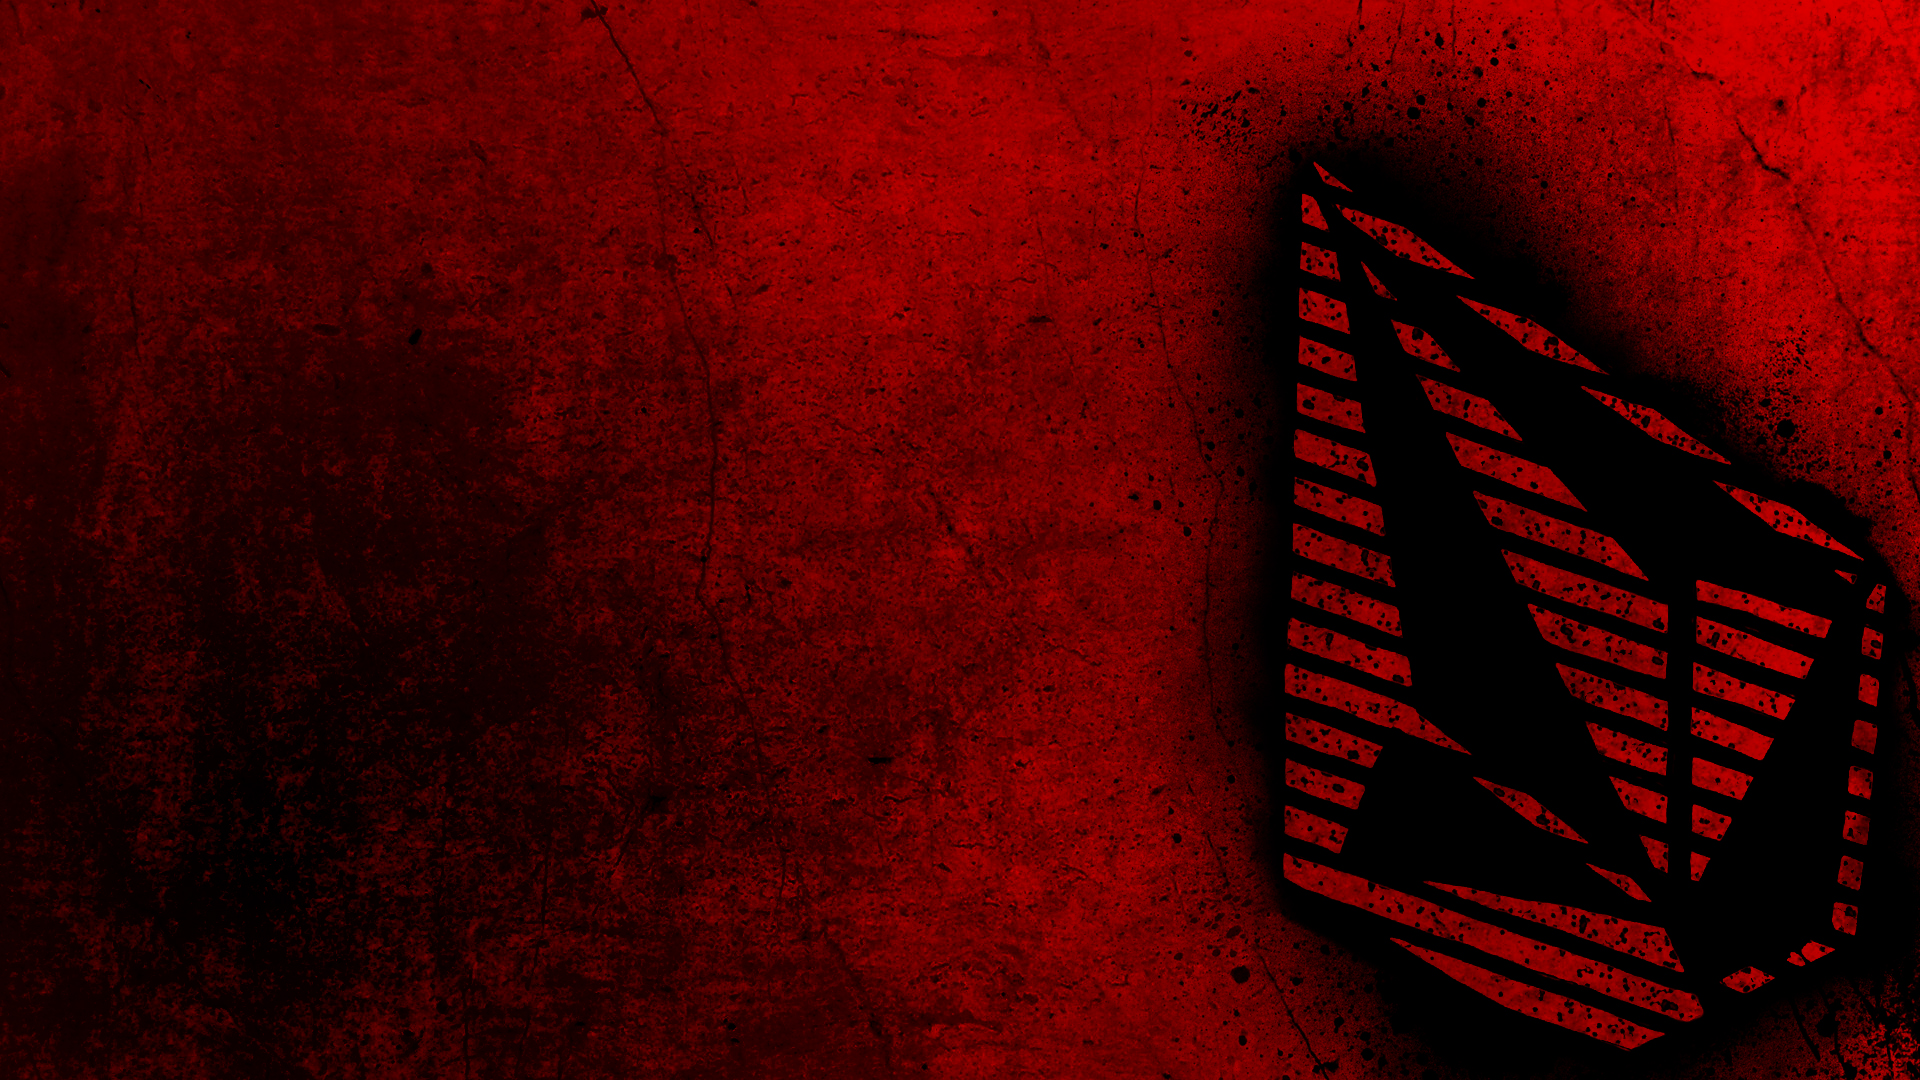 Red Volcom Graffiti Original Best HD Wallpaper Image Background Picture